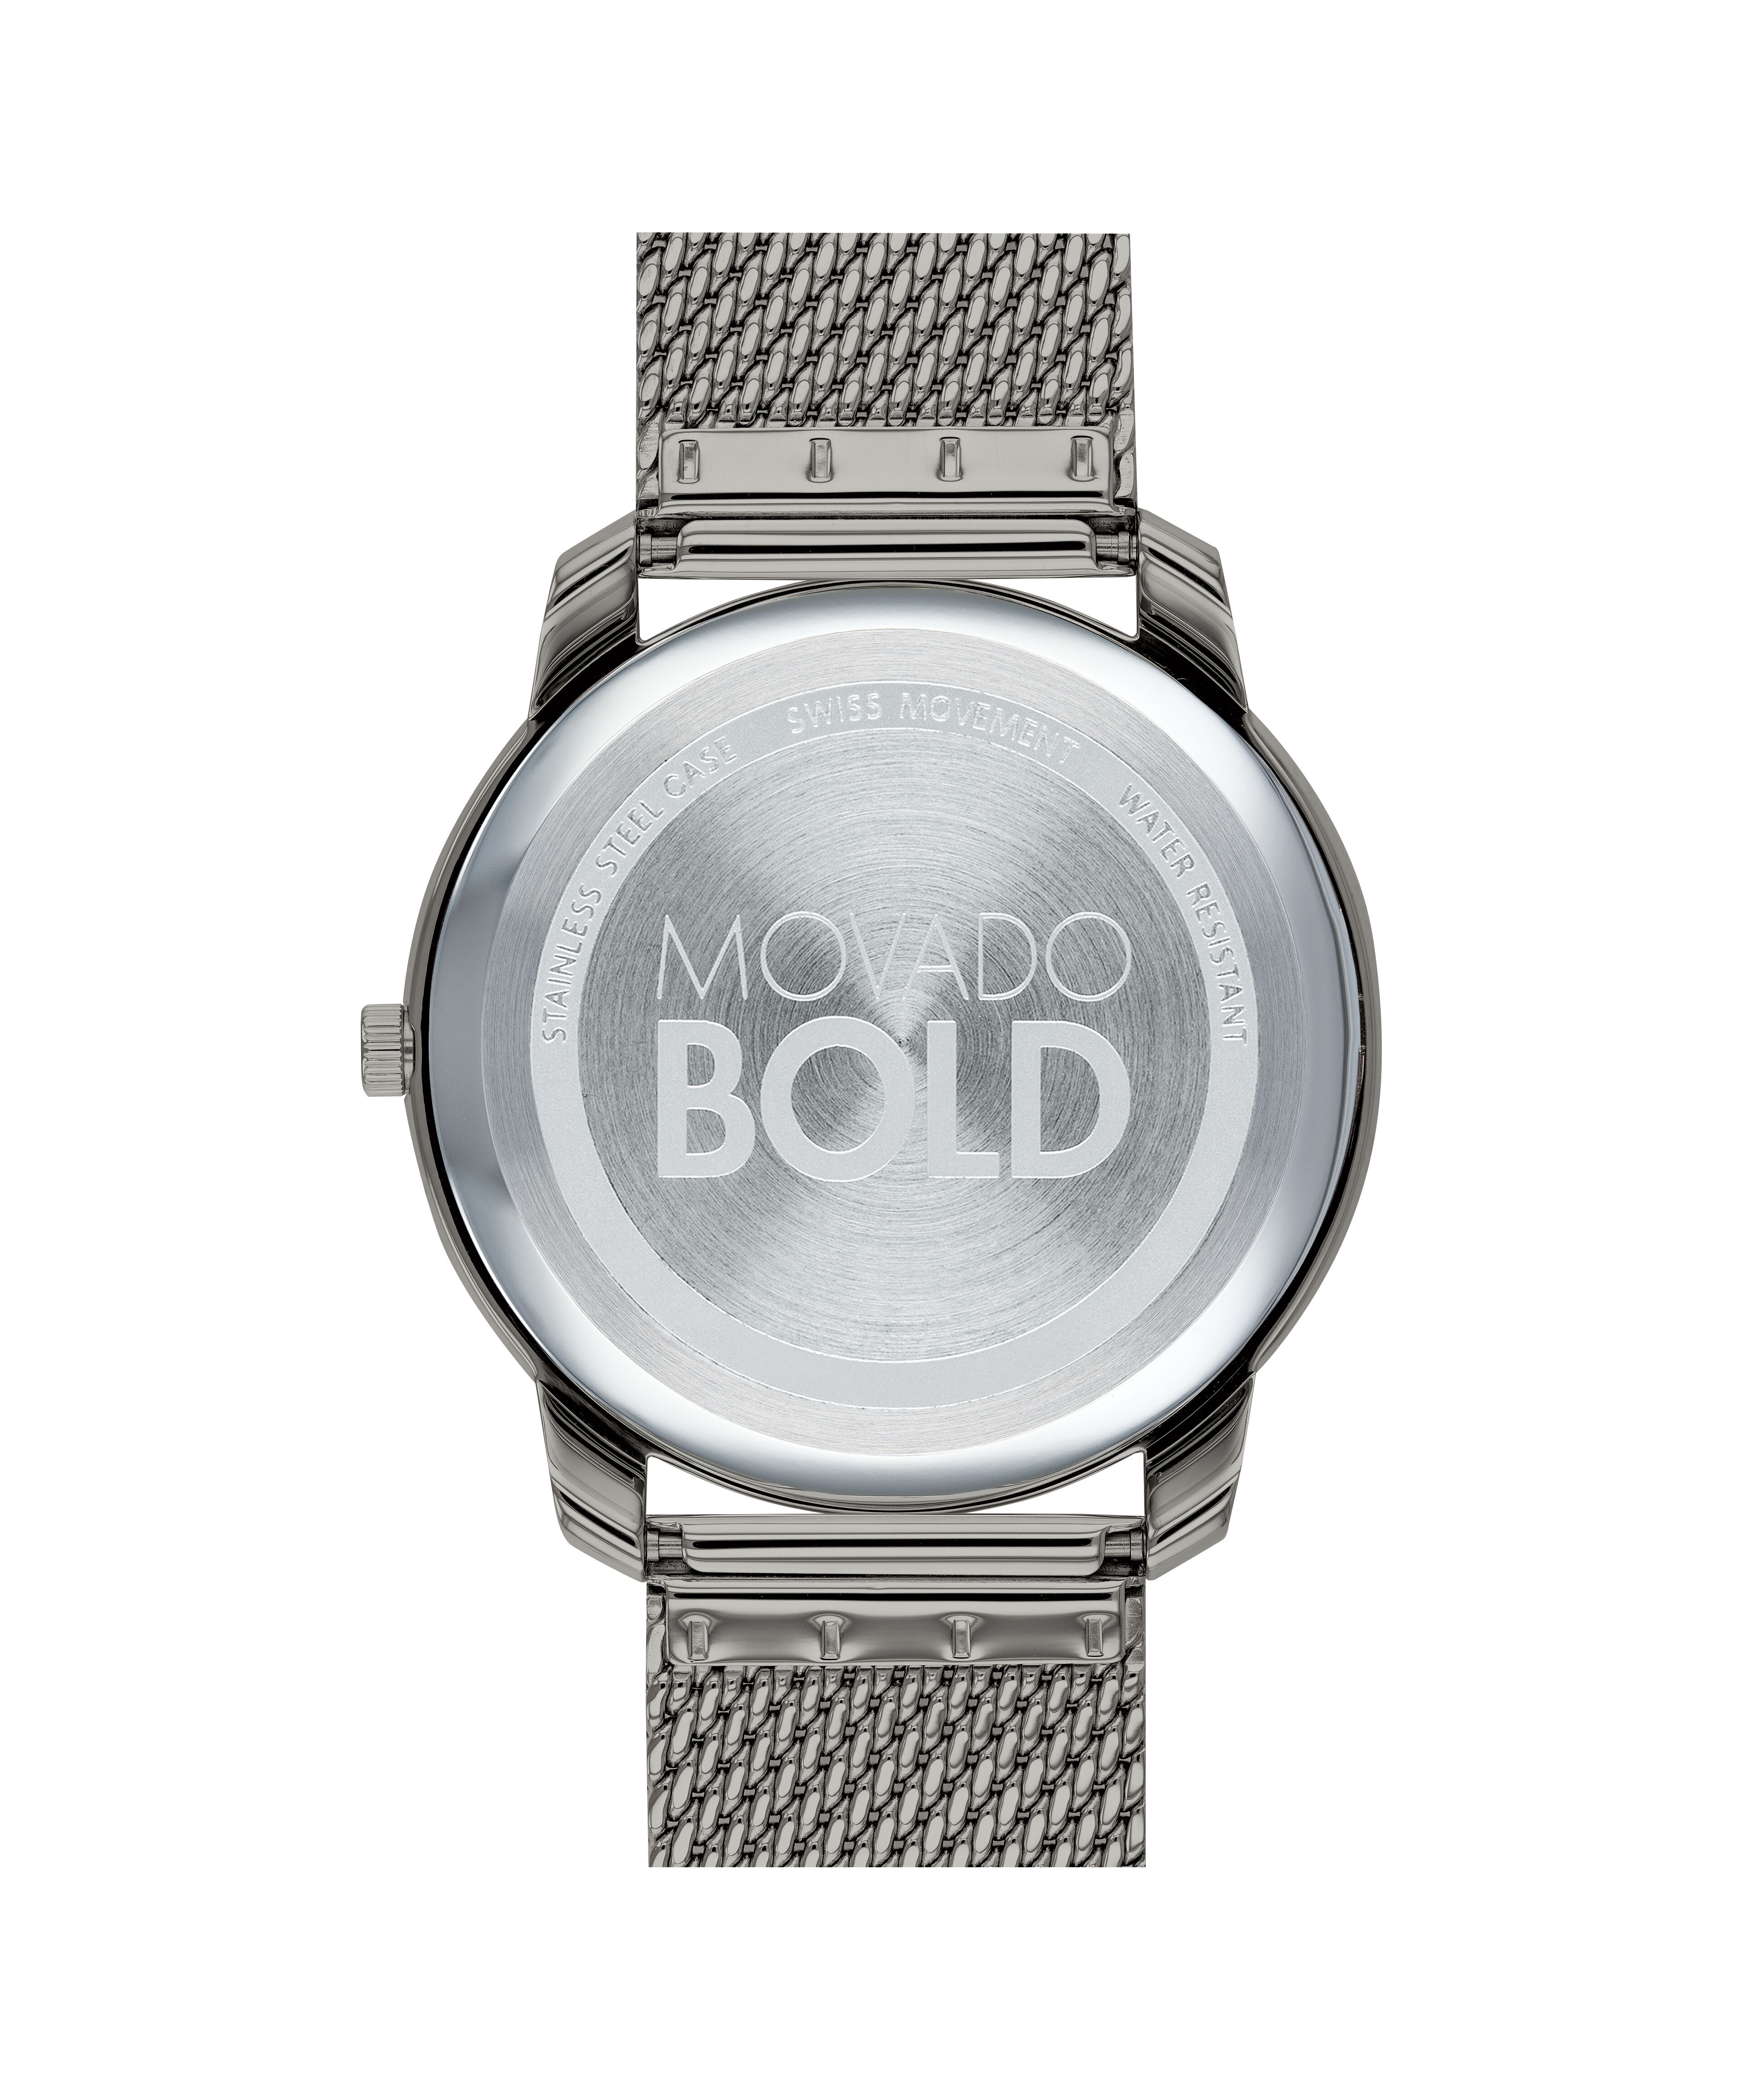 Movado steel m90 chronograph 35mm waterproof FB (Borgel) case